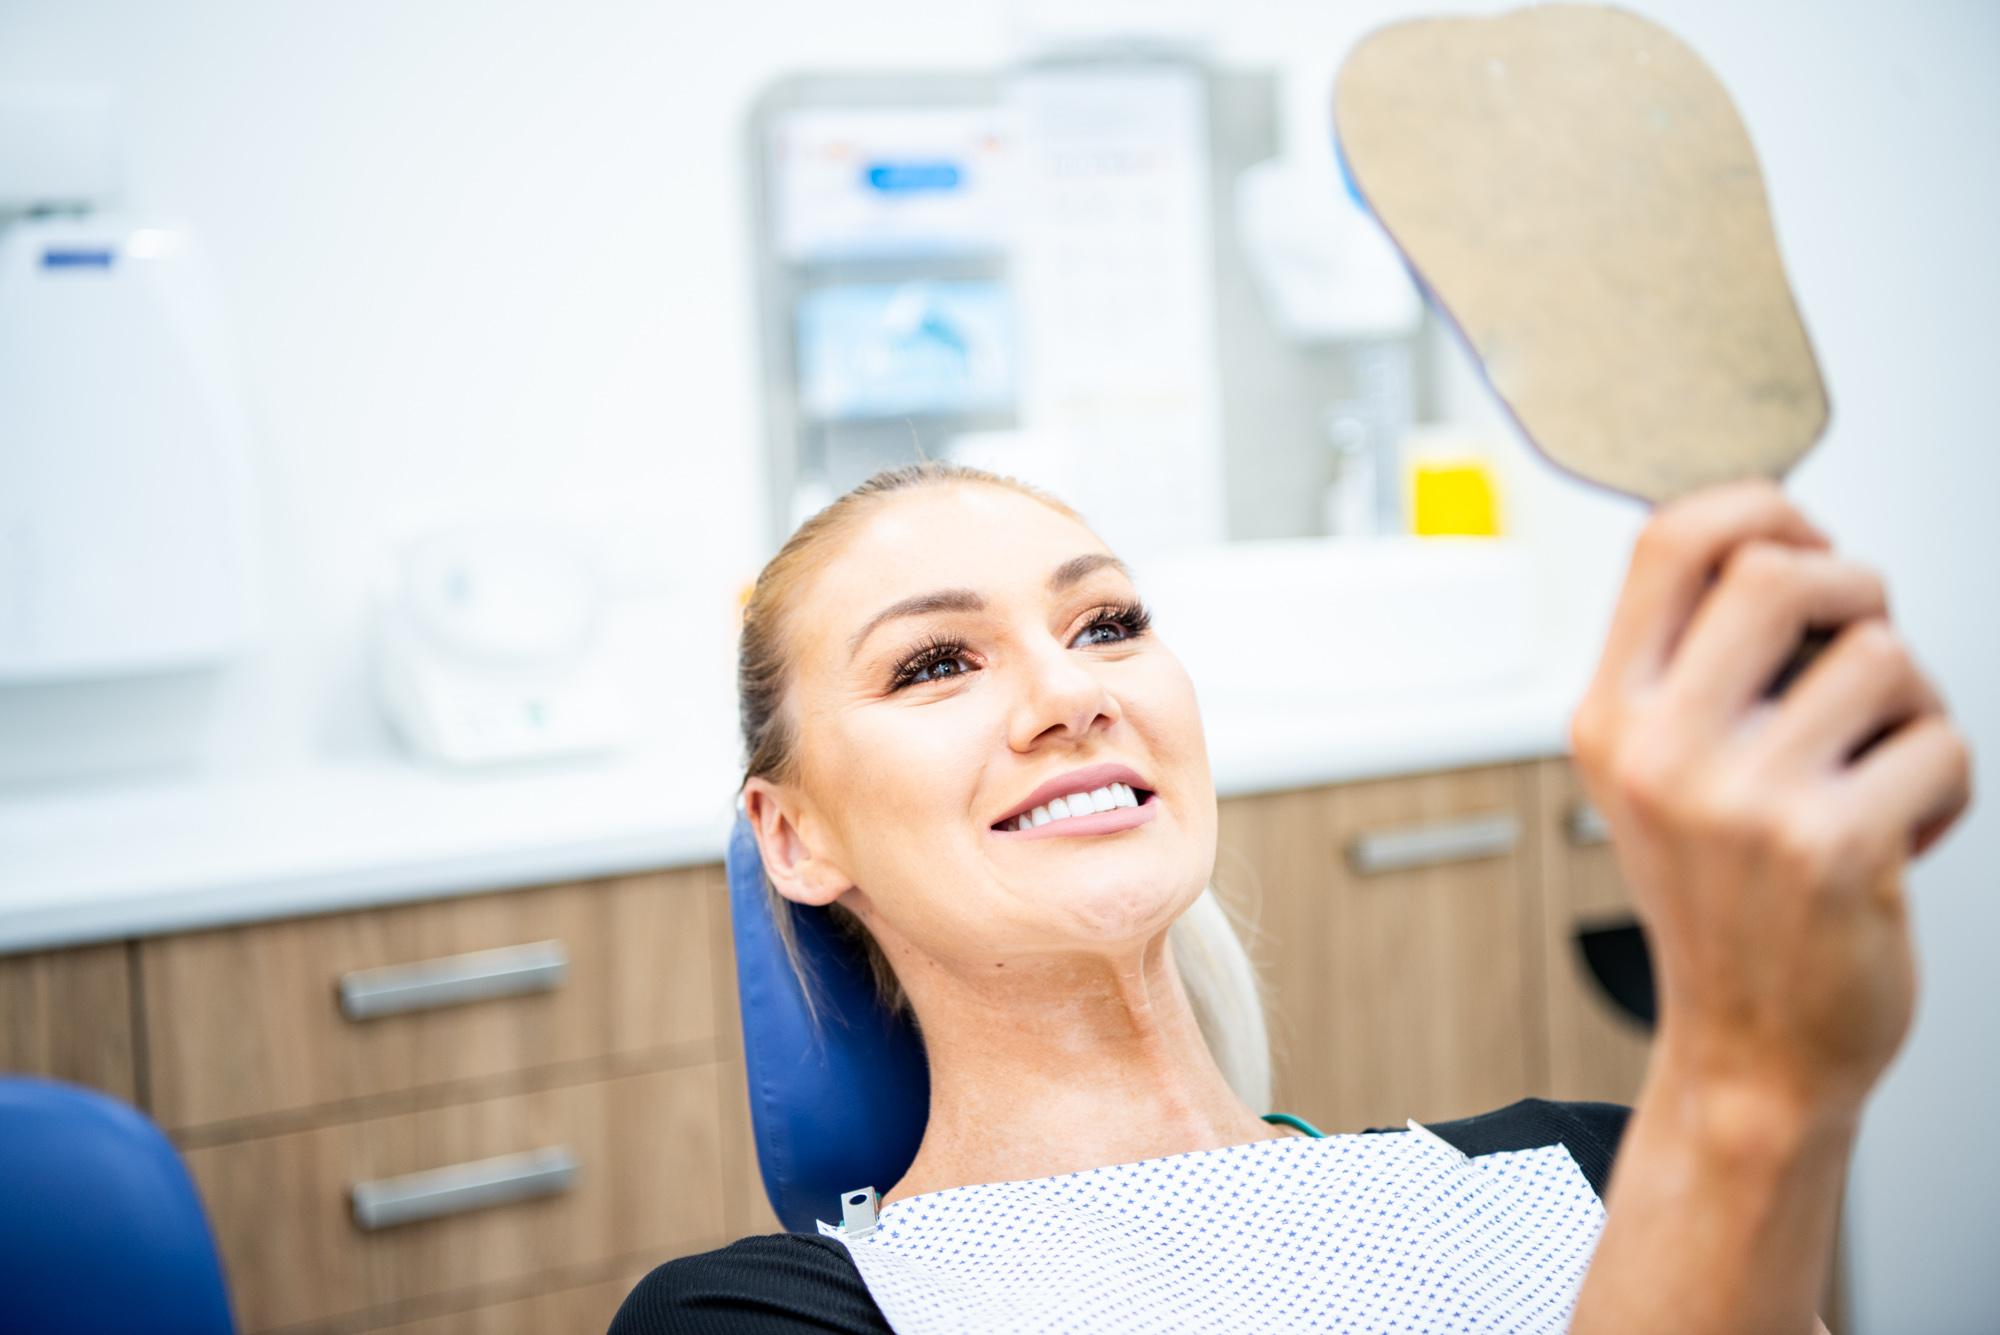 Is Teeth Whitening Bad?